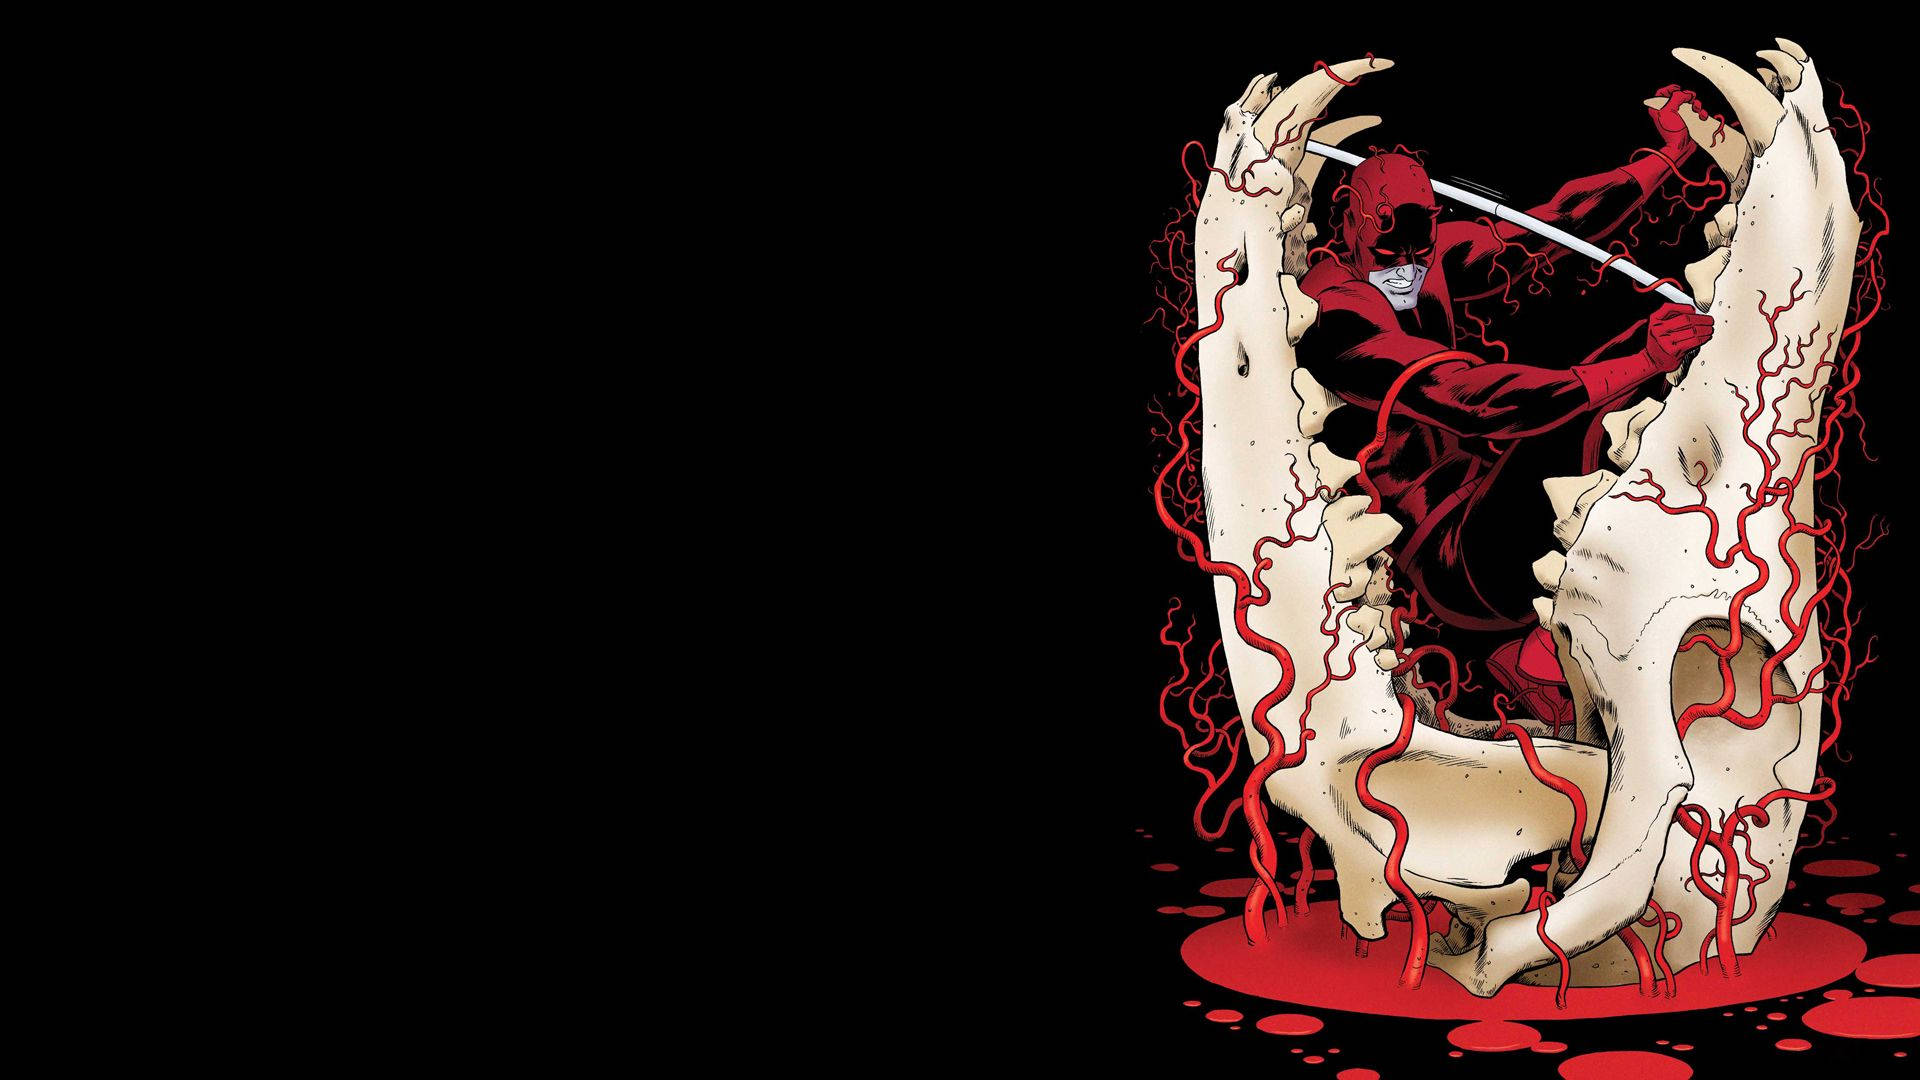 Bloody Skull Versus Daredevil Background